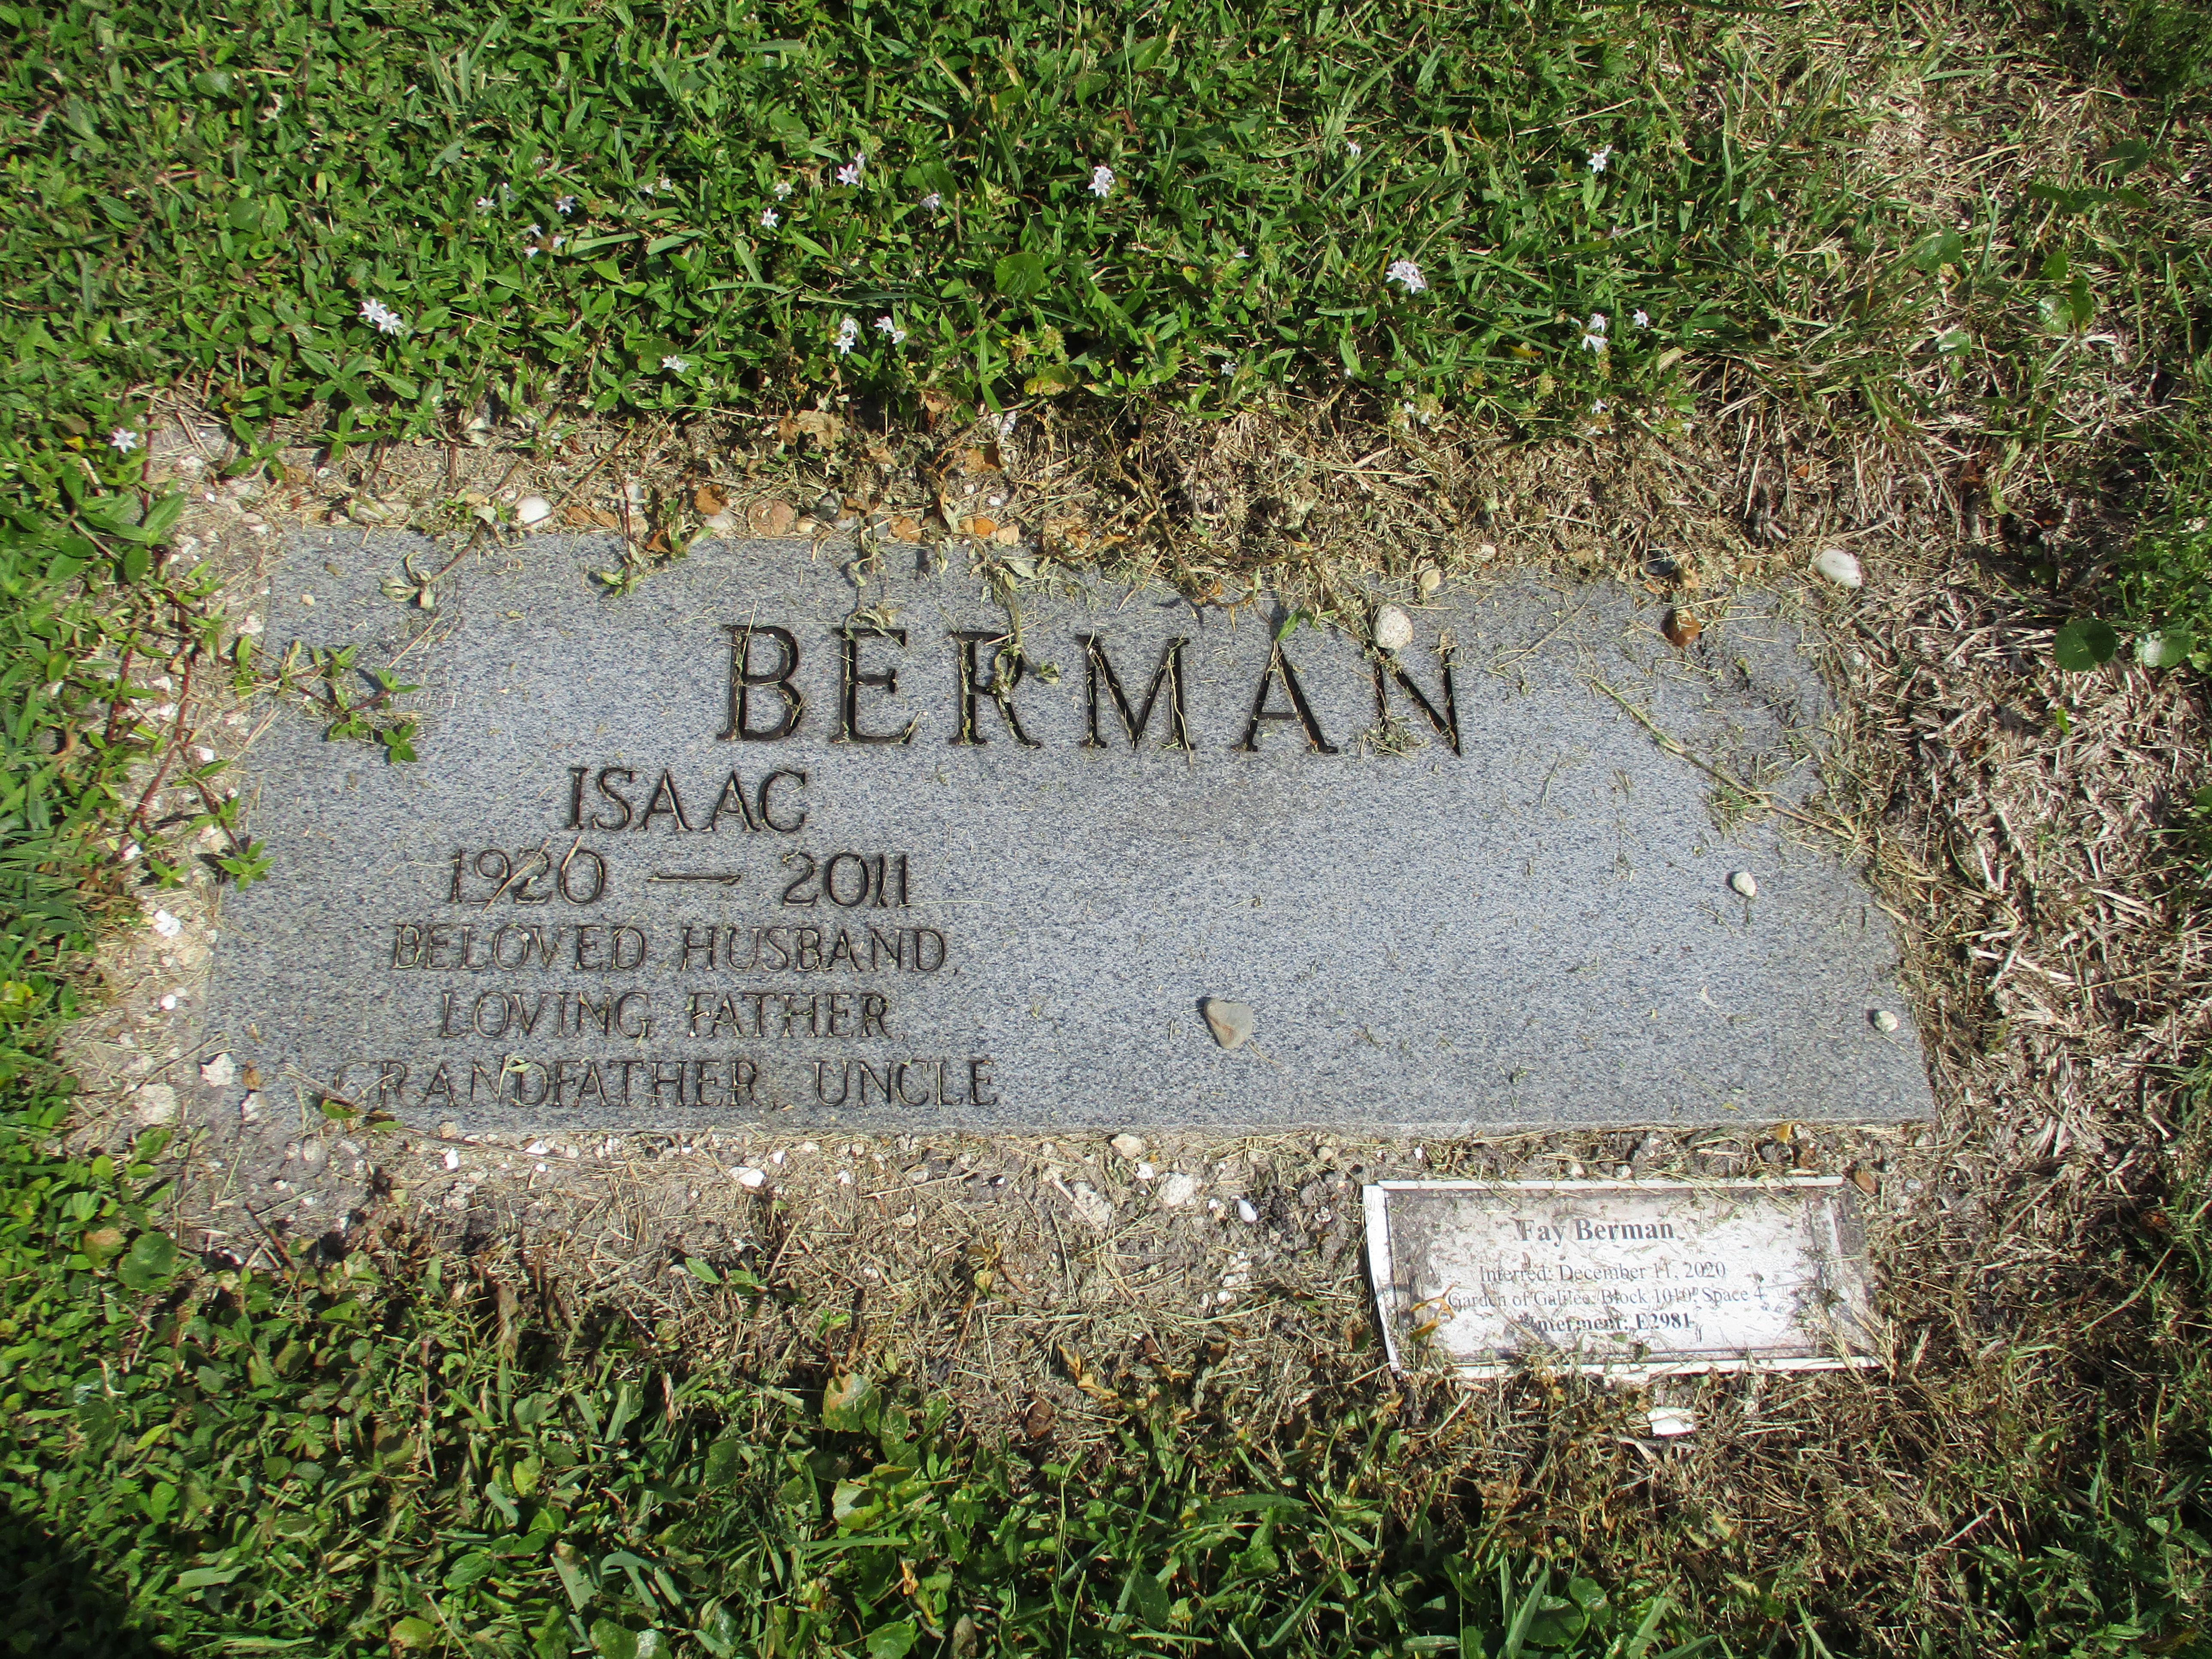 Isaac Berman